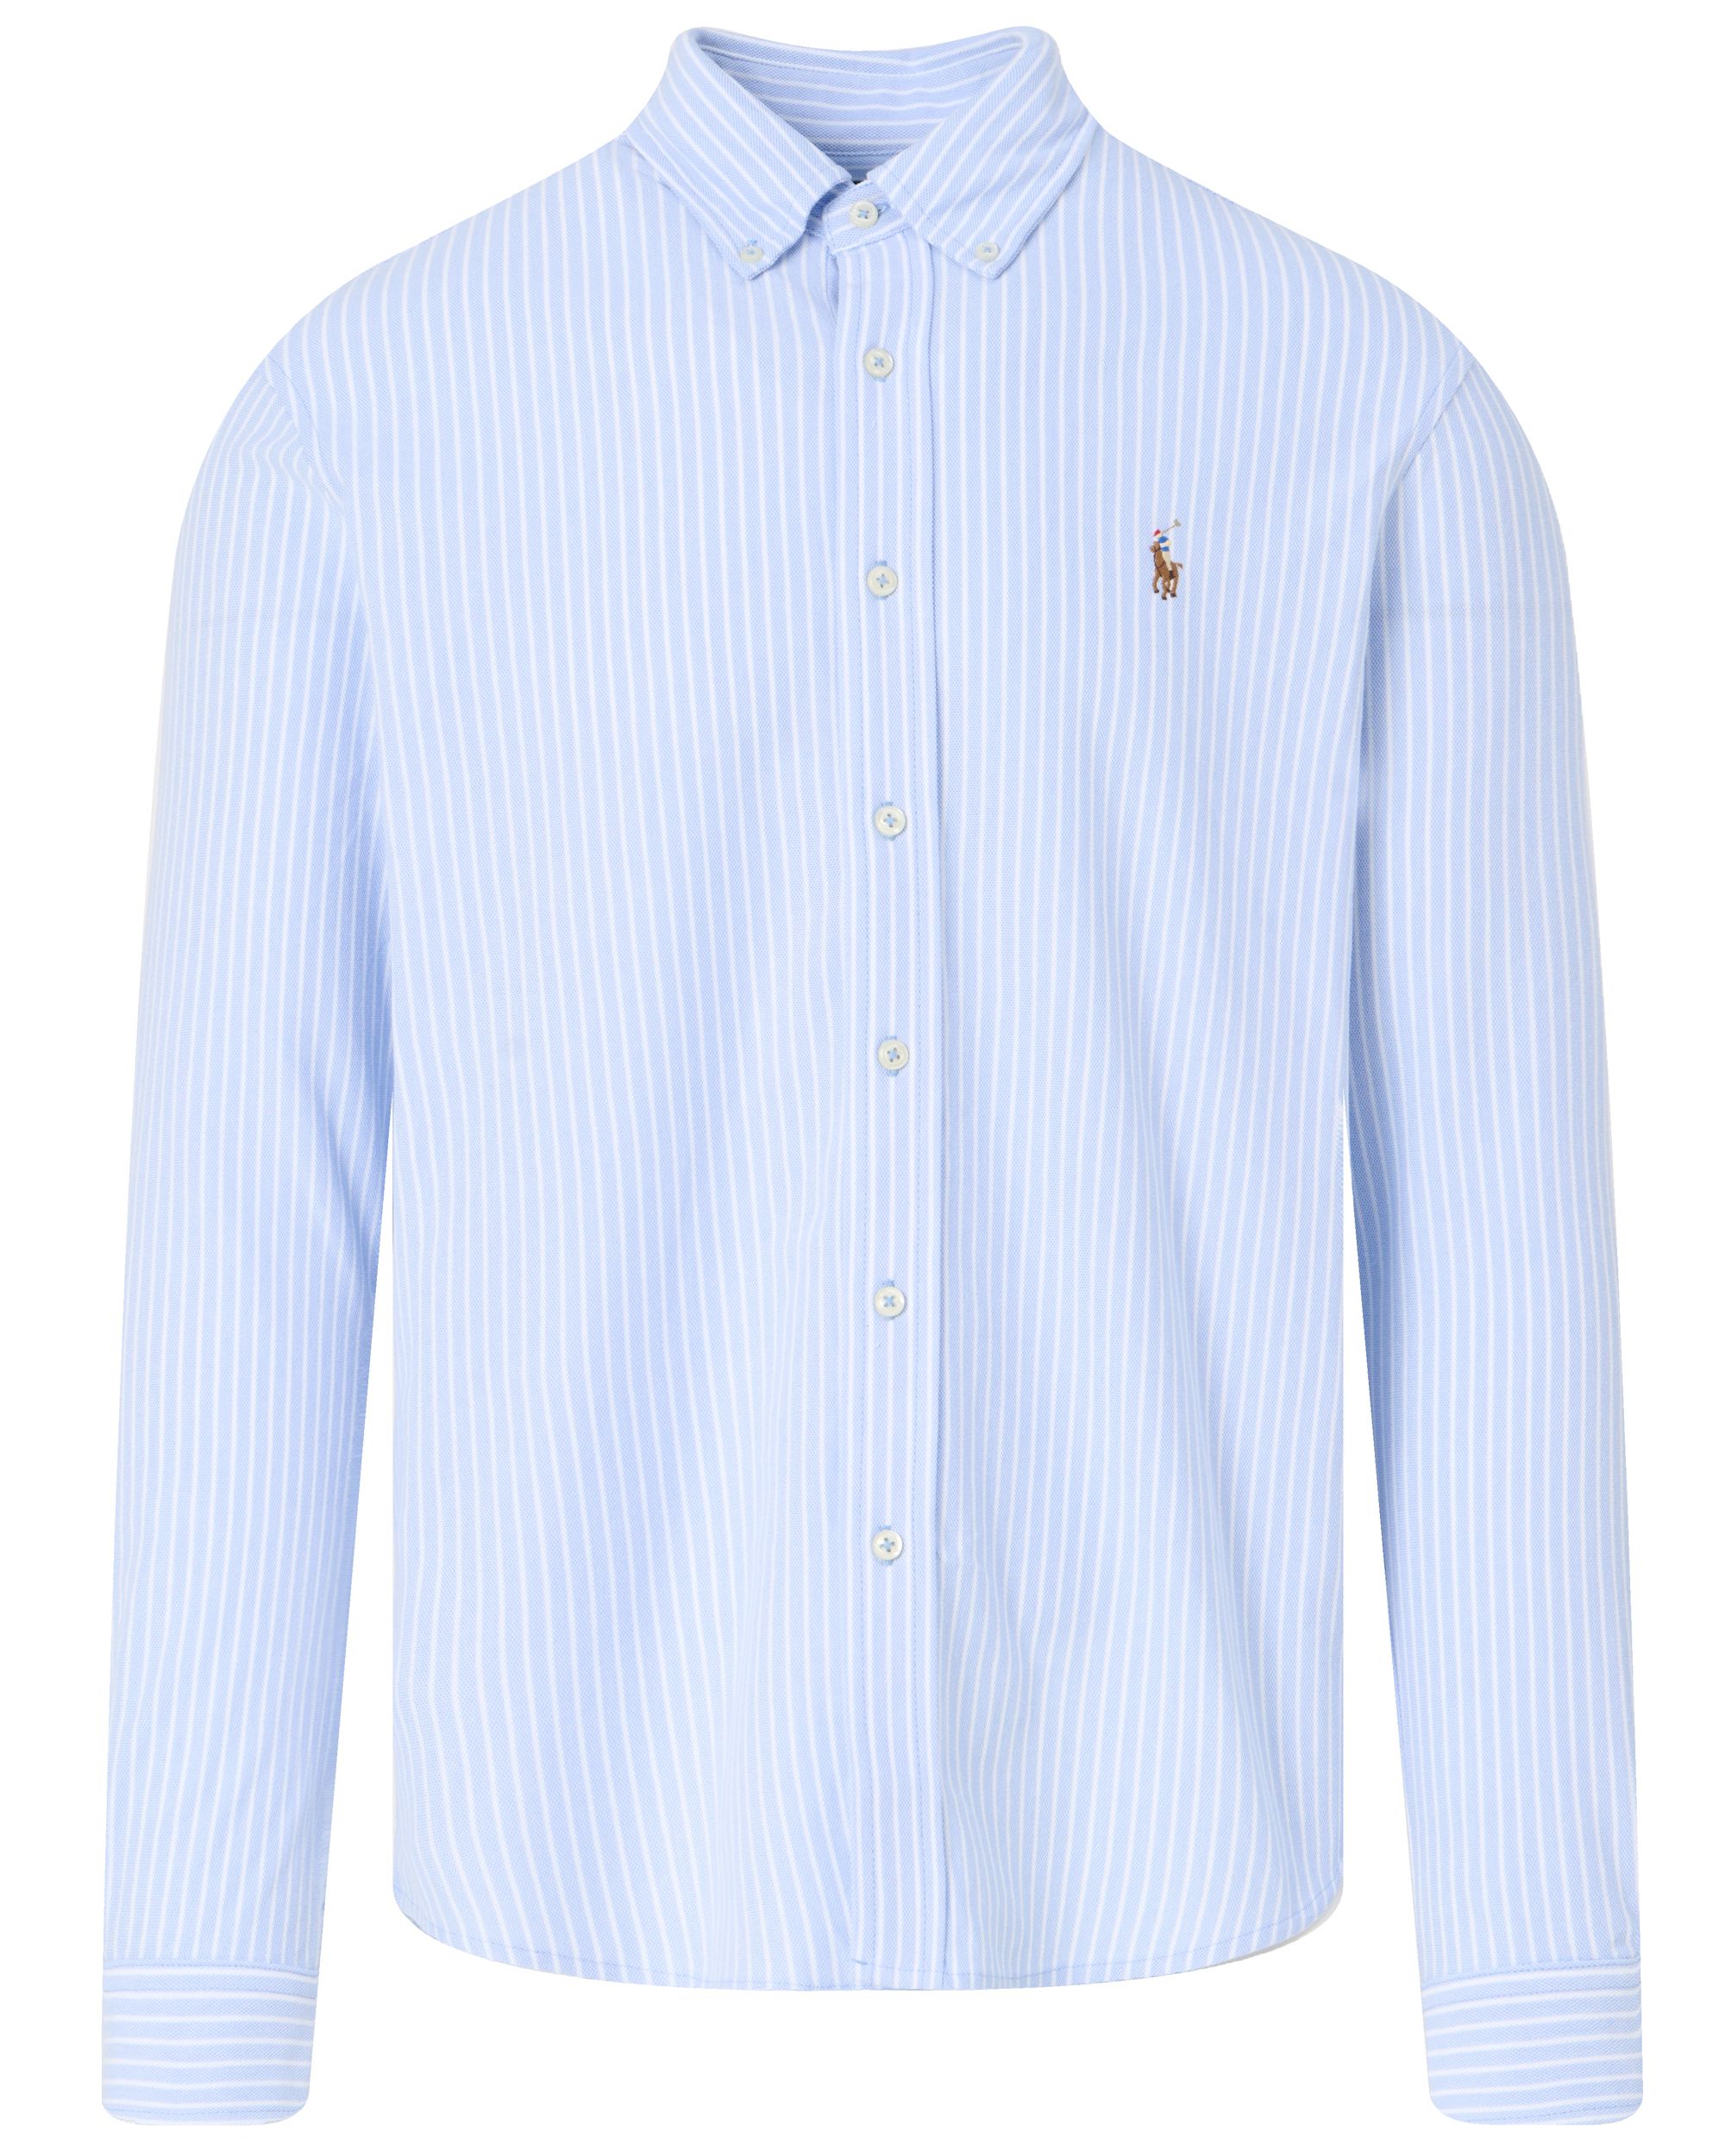 Polo Ralph Lauren Casual Overhemd LM Blauw 095274-001-L